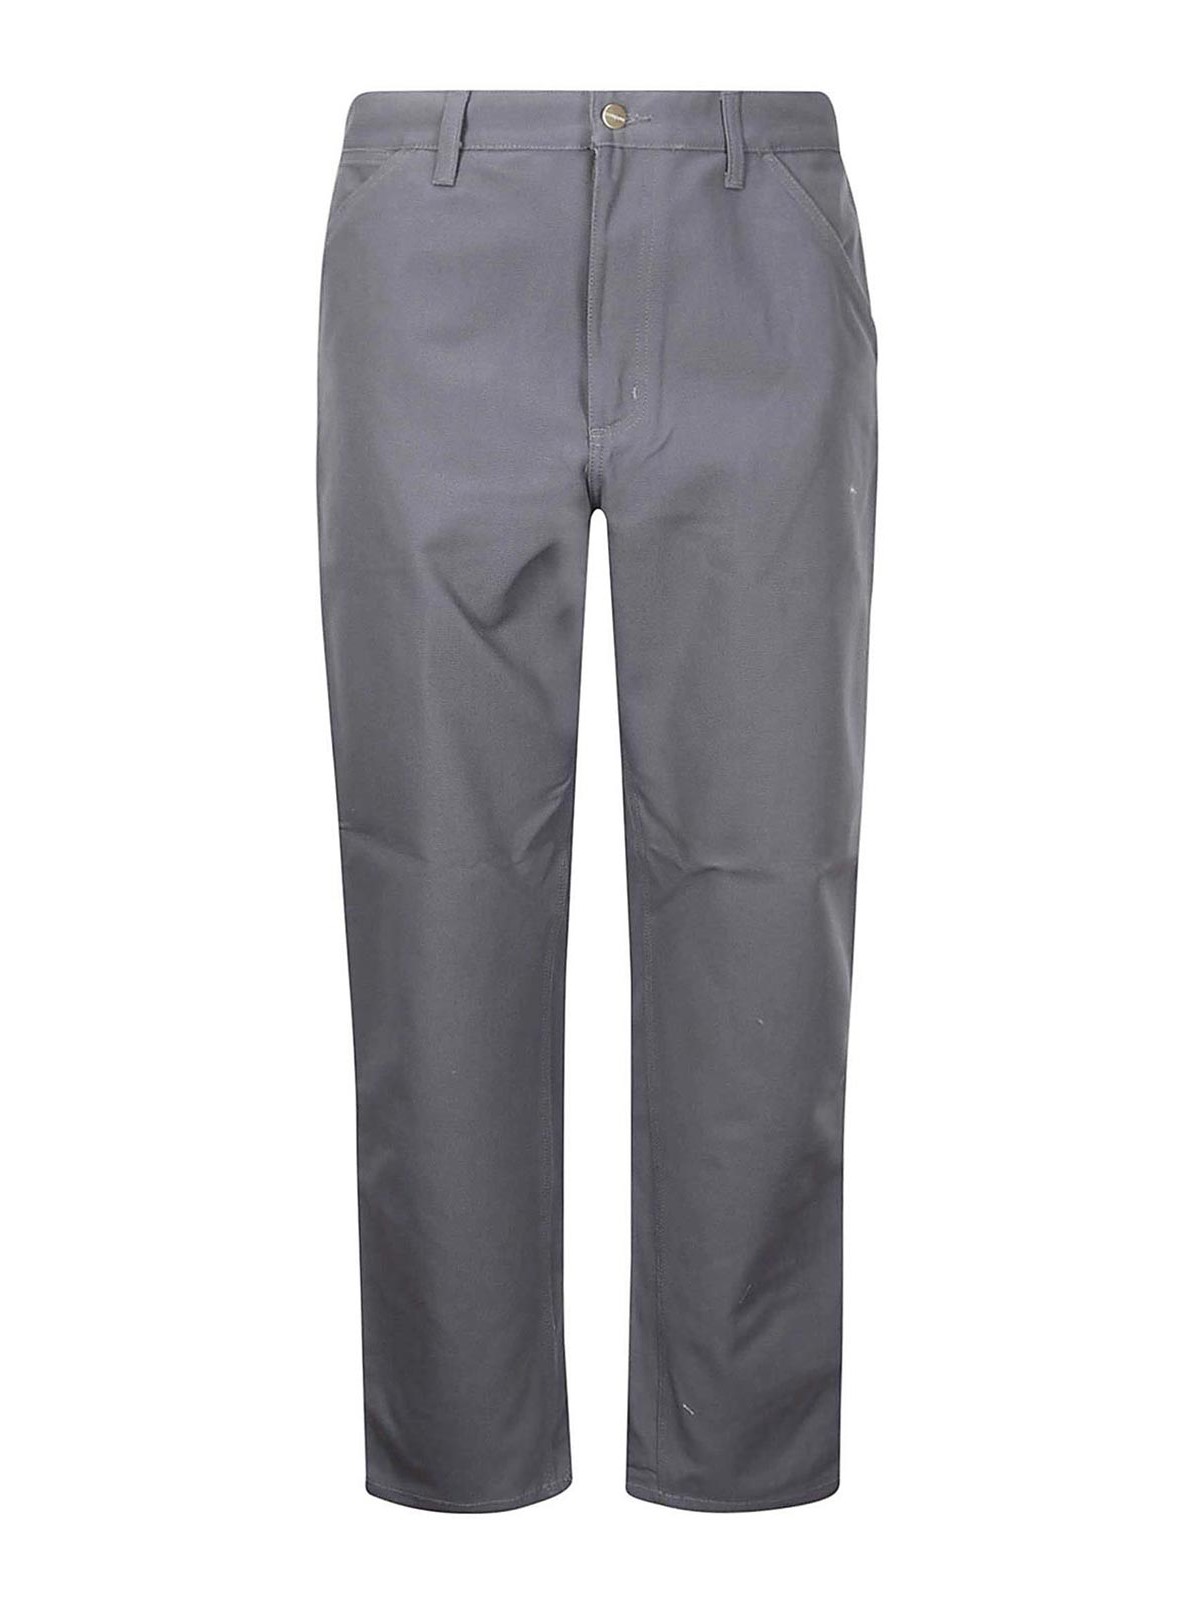 Carhartt Grey Pants